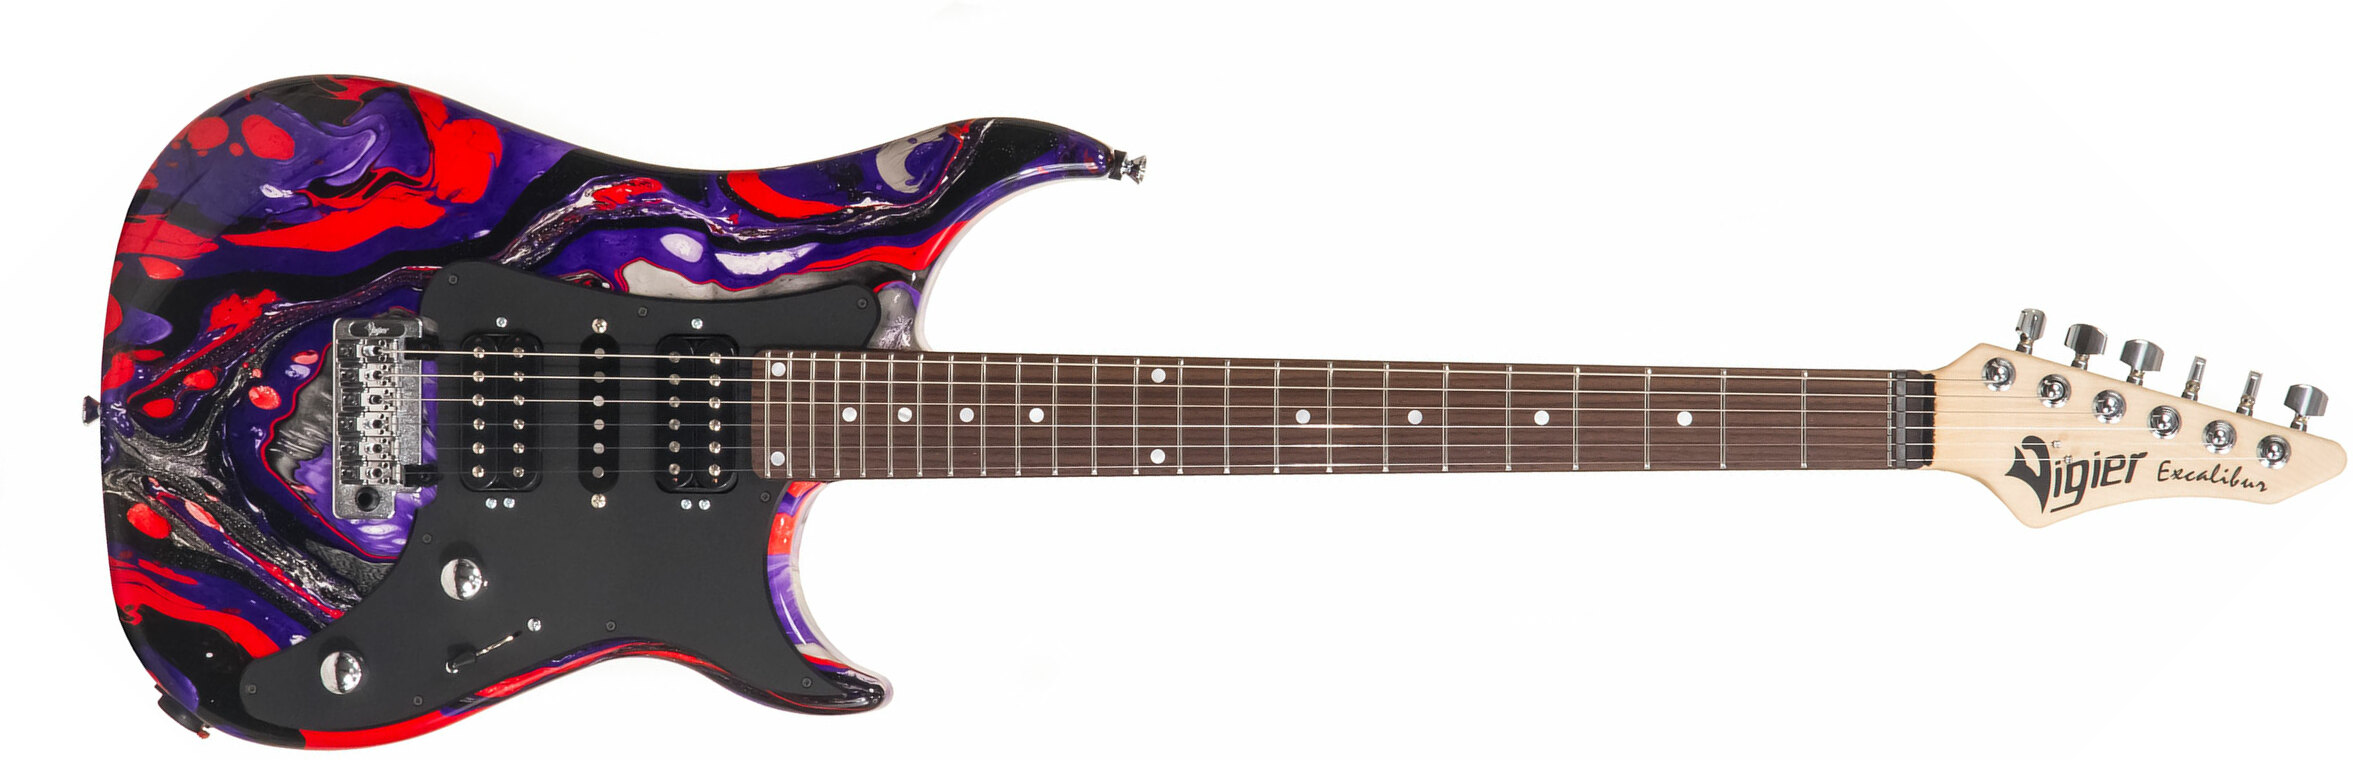 Vigier Excalibur Supraa Hsh Trem Rw - Rock Art Purple Red Black - E-Gitarre in Str-Form - Main picture